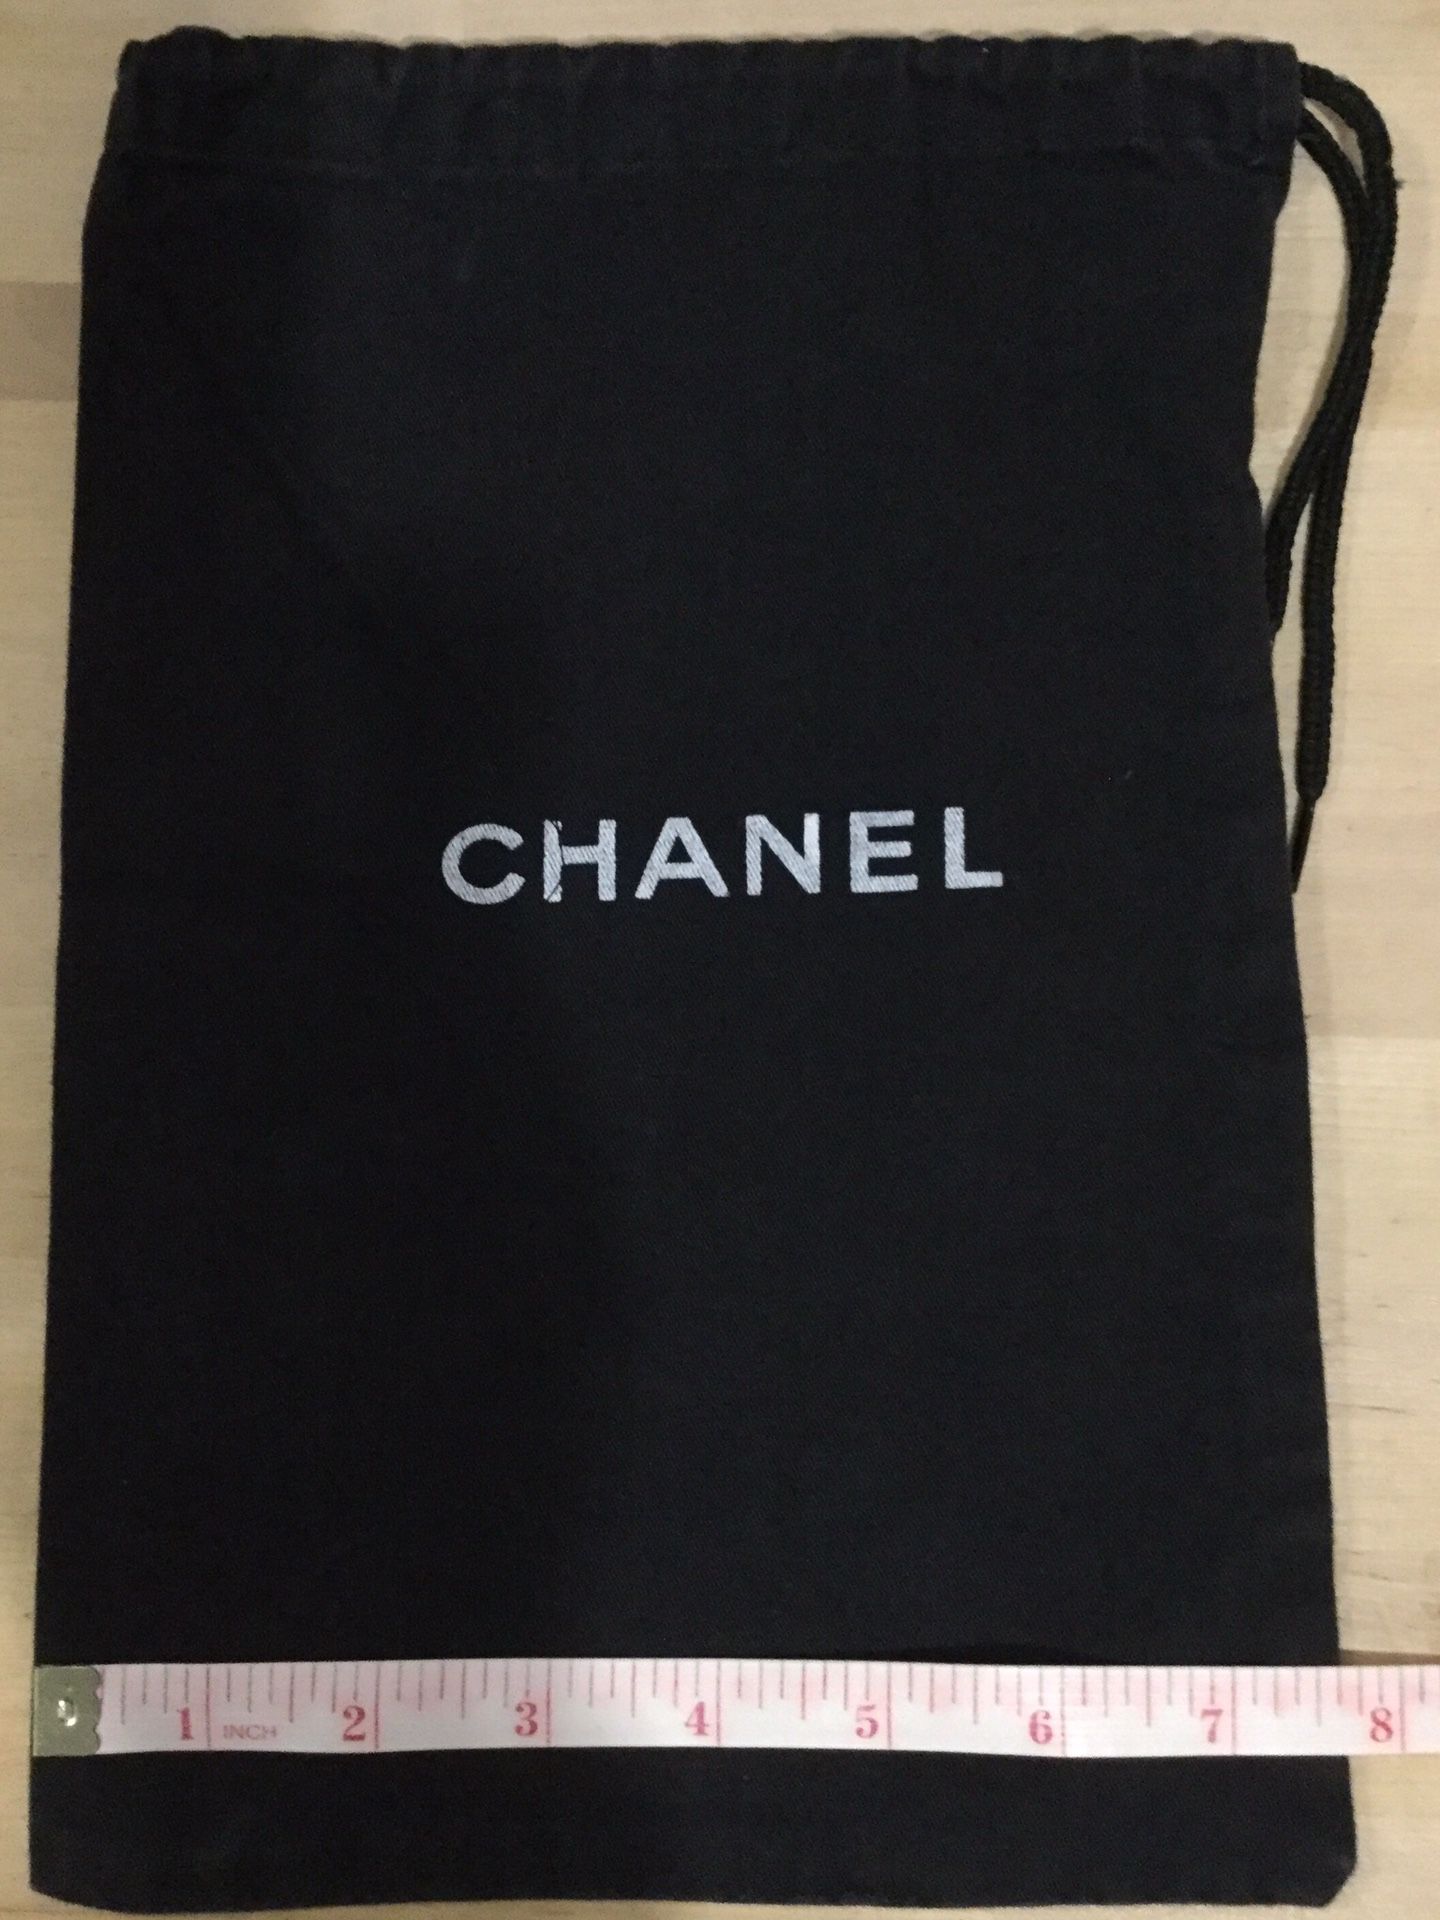 Chanel dust bag